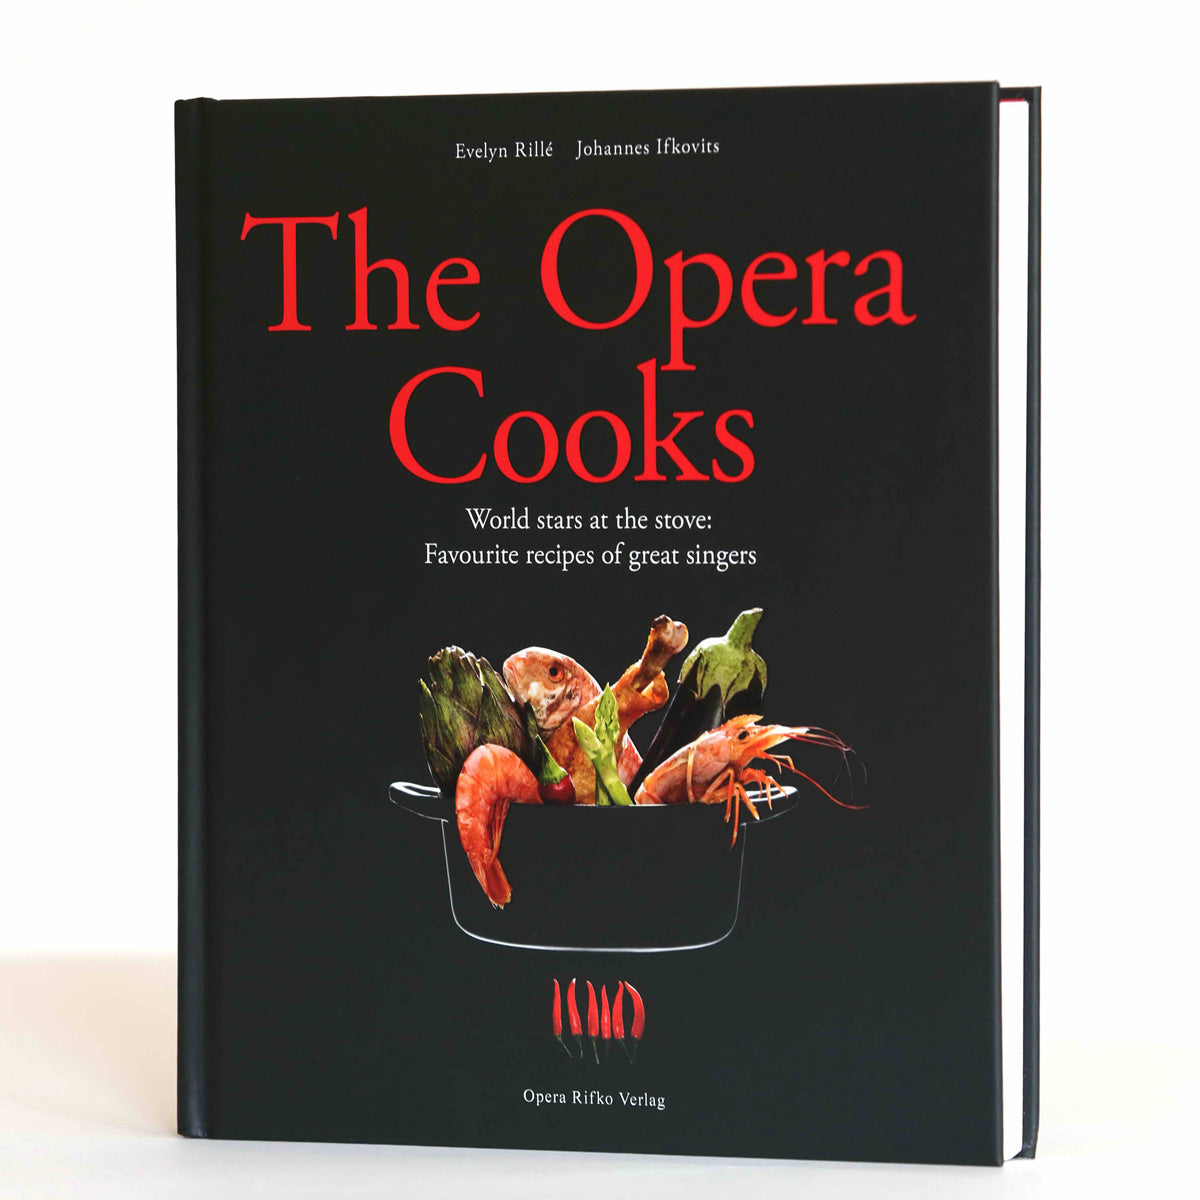 The Opera Cooks by Johannes Ifkovits